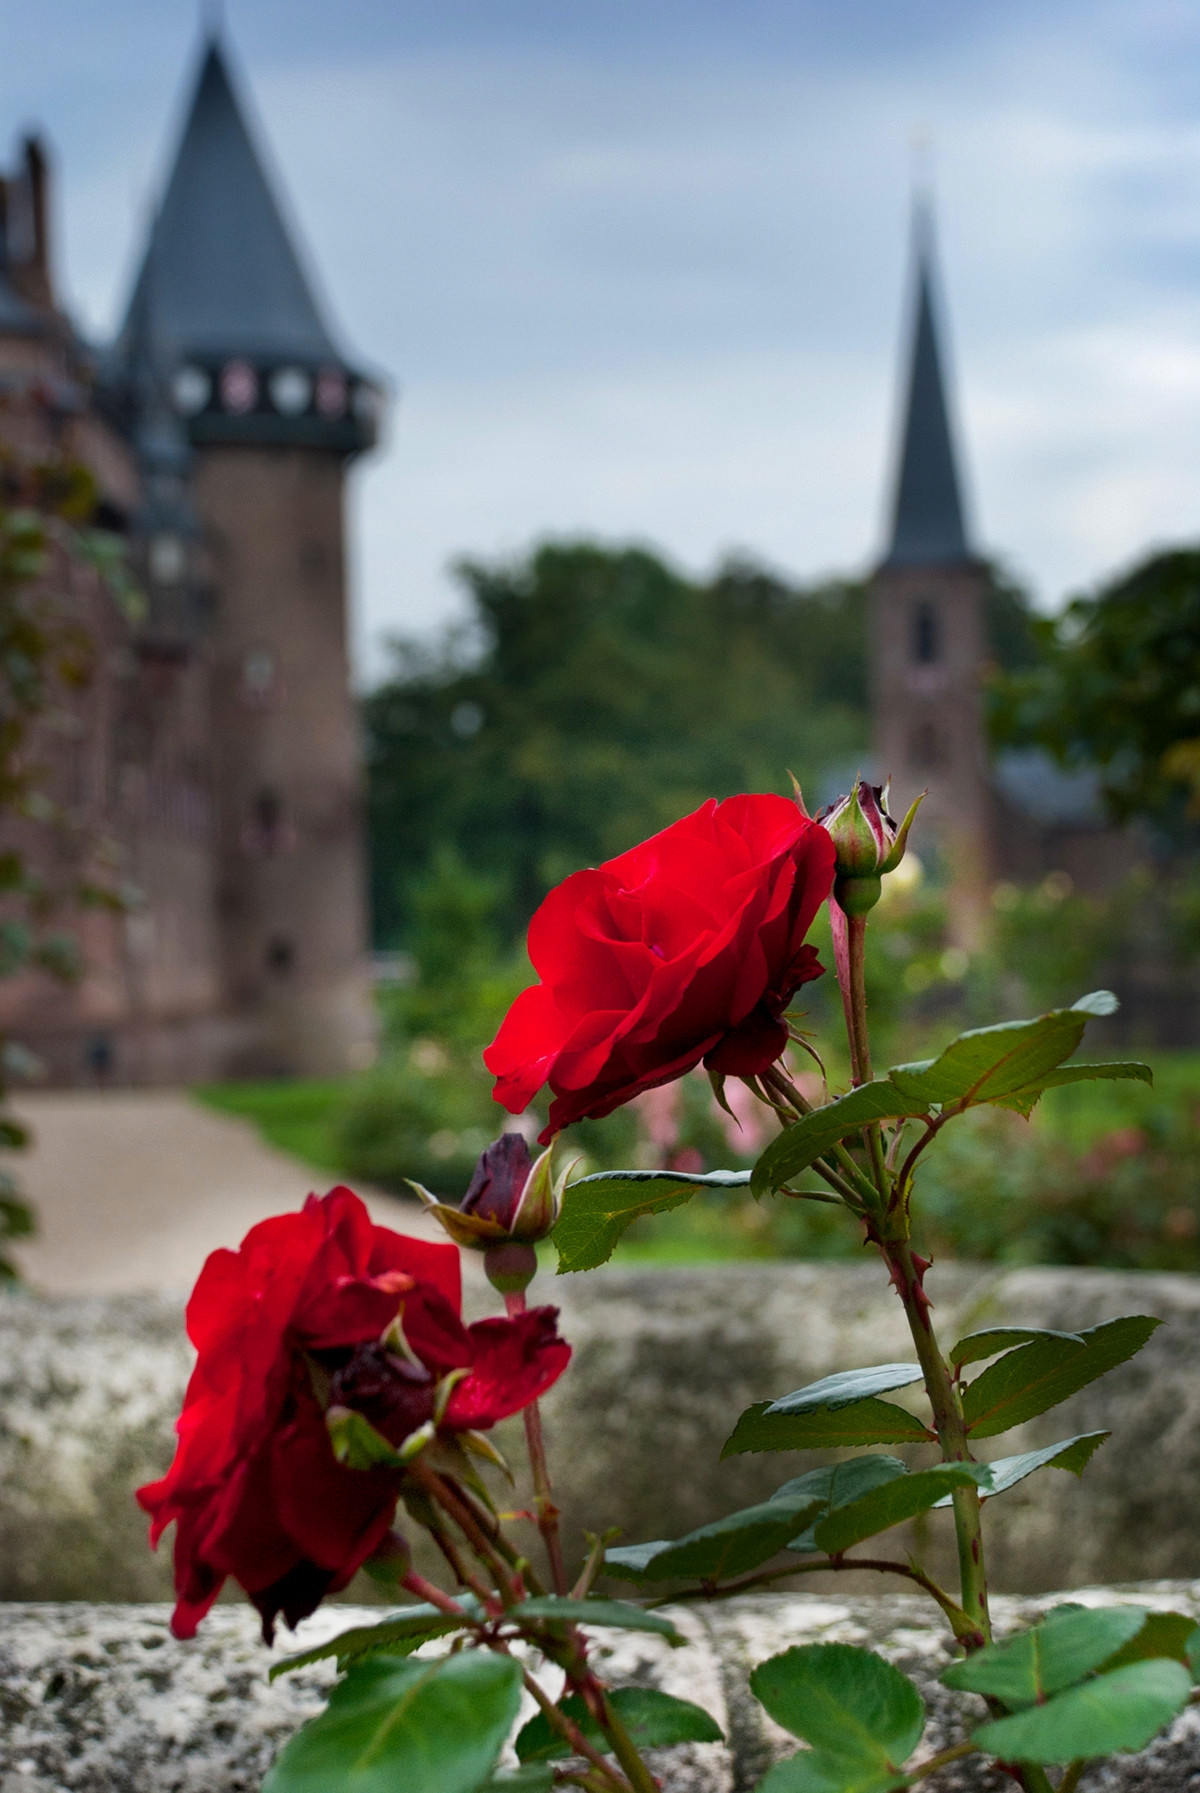 Rose garden at Castle de Haar. Credit Ewald Zomer